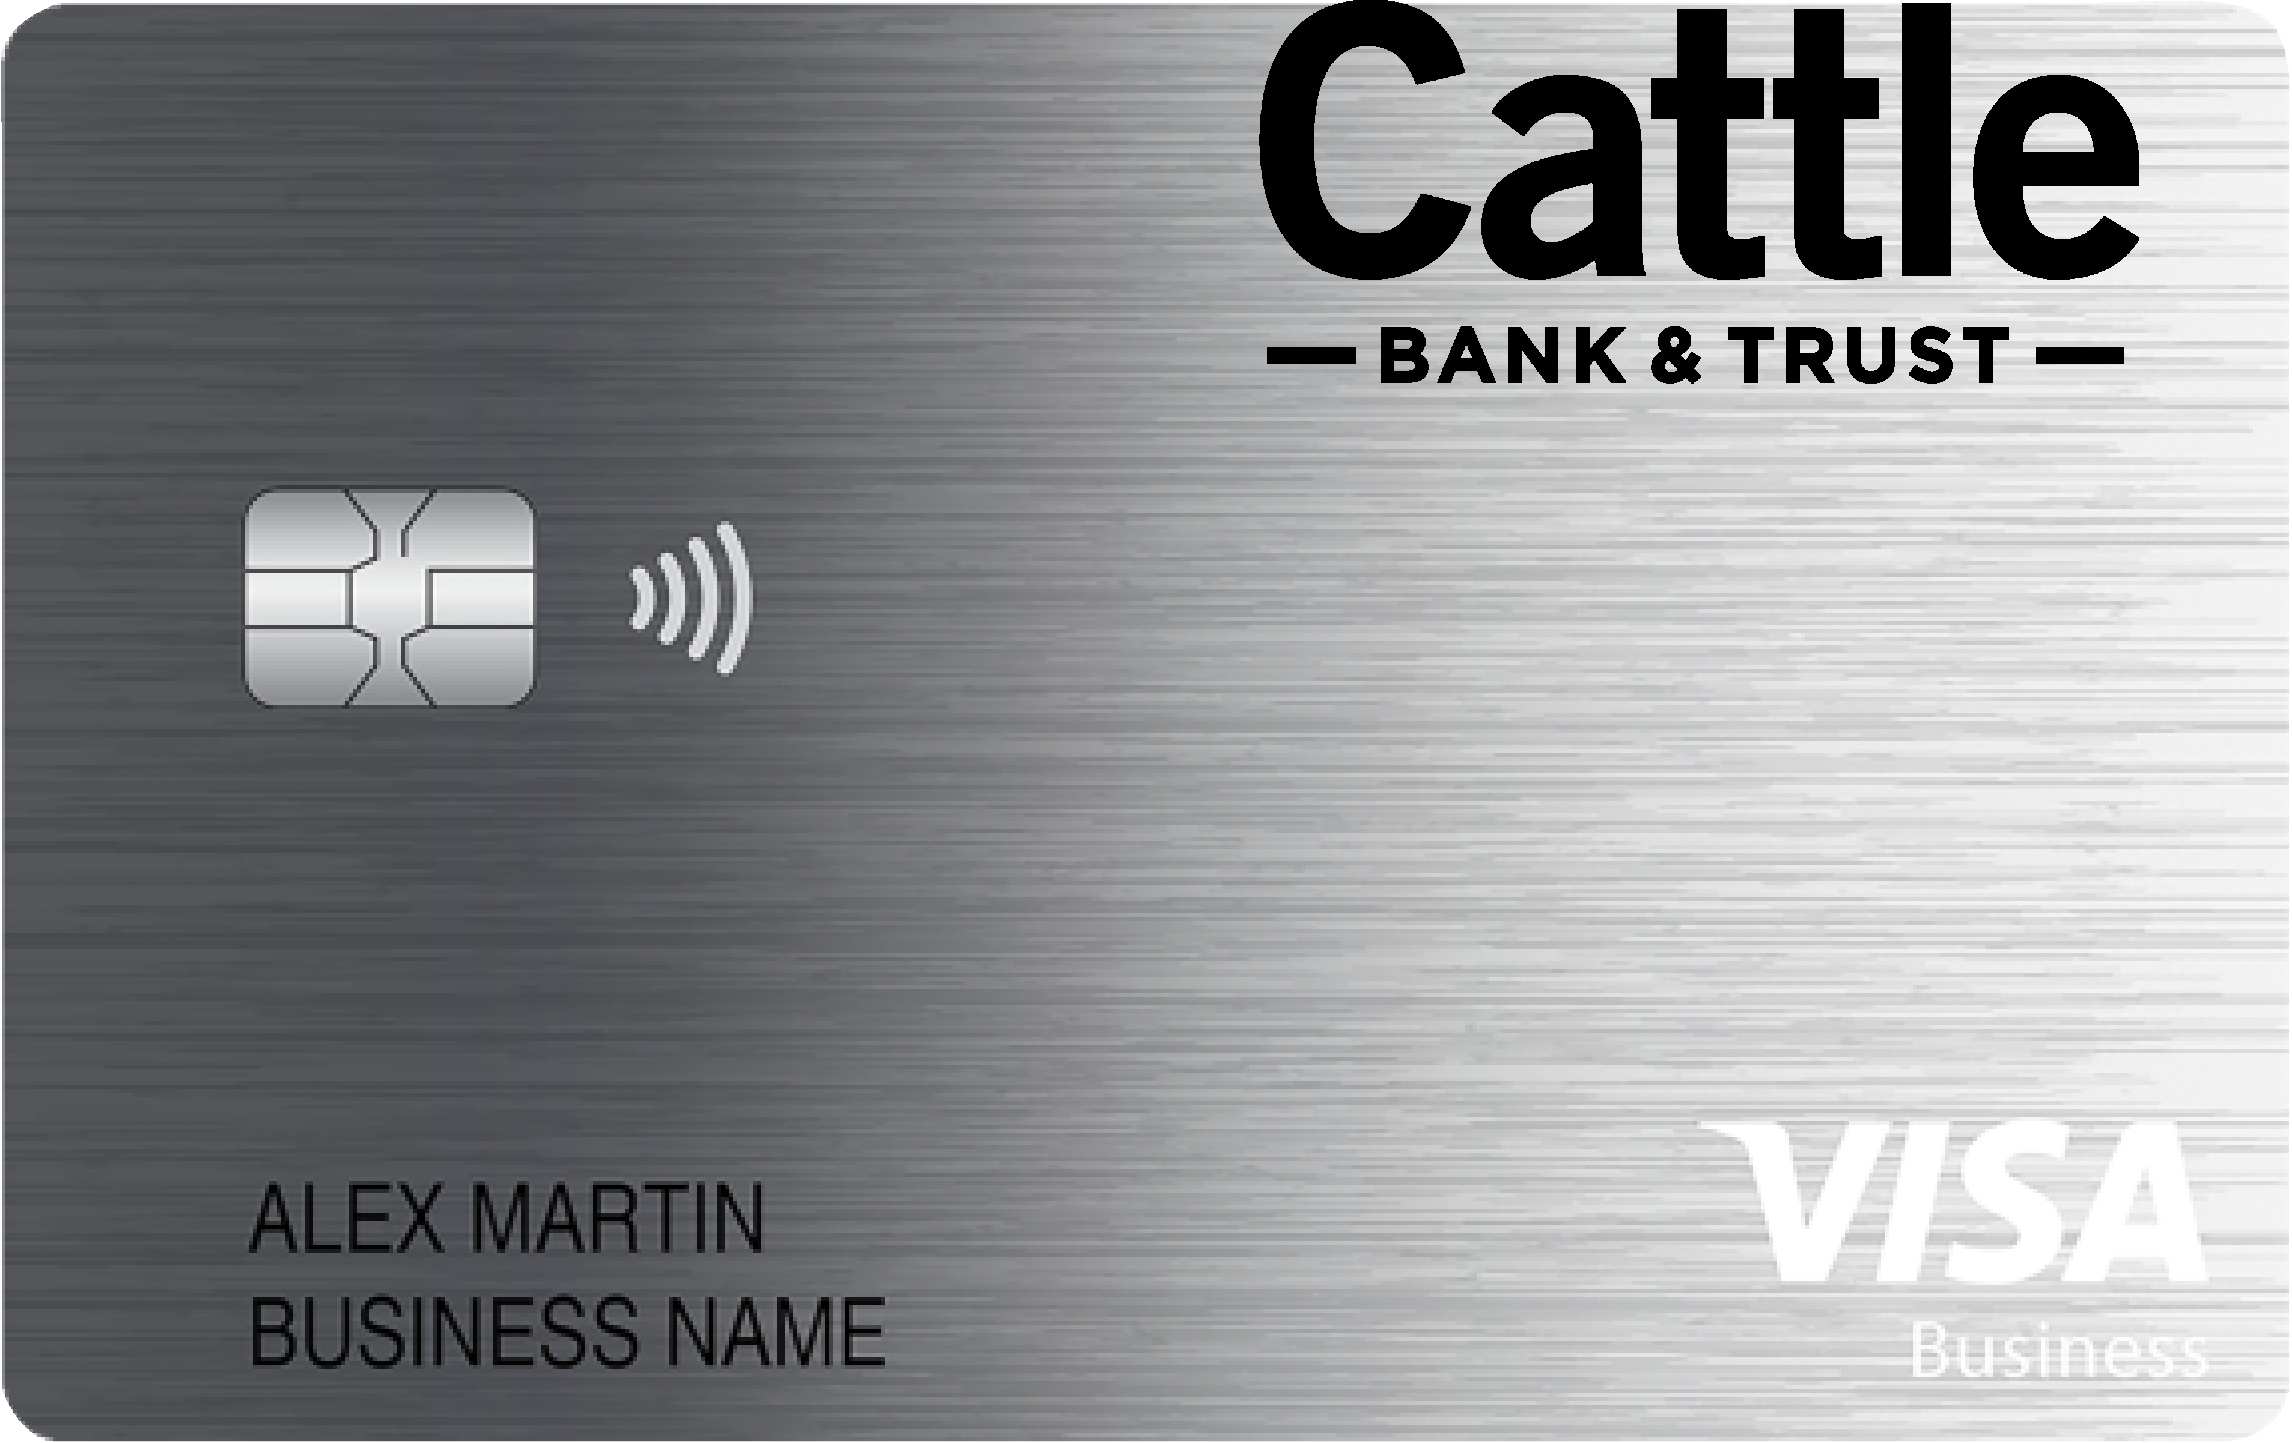 Cattle Bank & Trust Business Cash Preferred Card